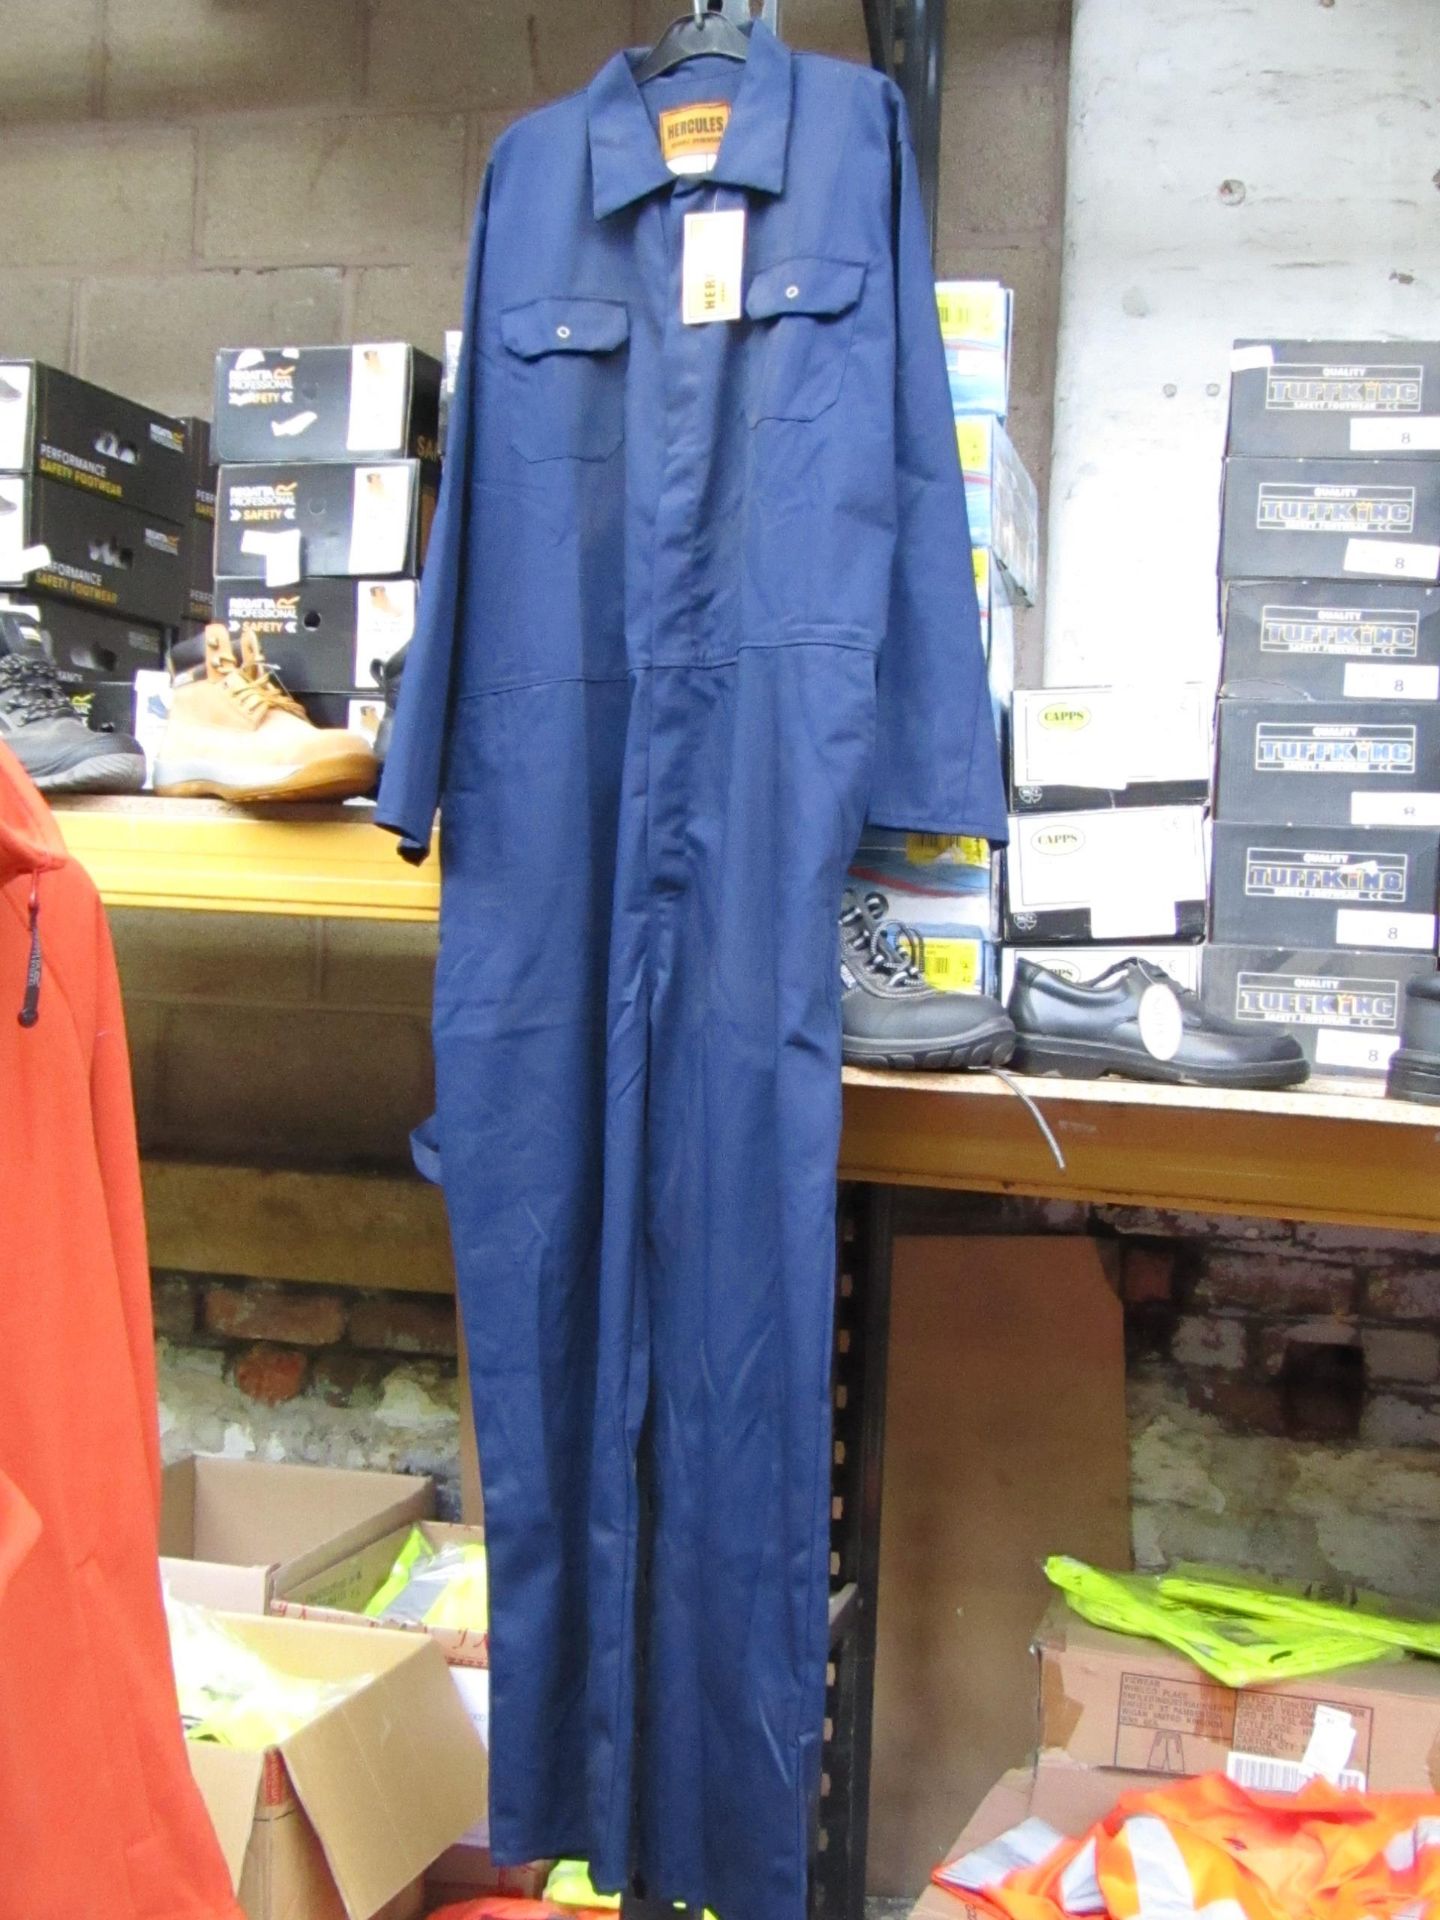 2 x Men's Hercules Workwear Boiler suit. Size 52. New in Packaging